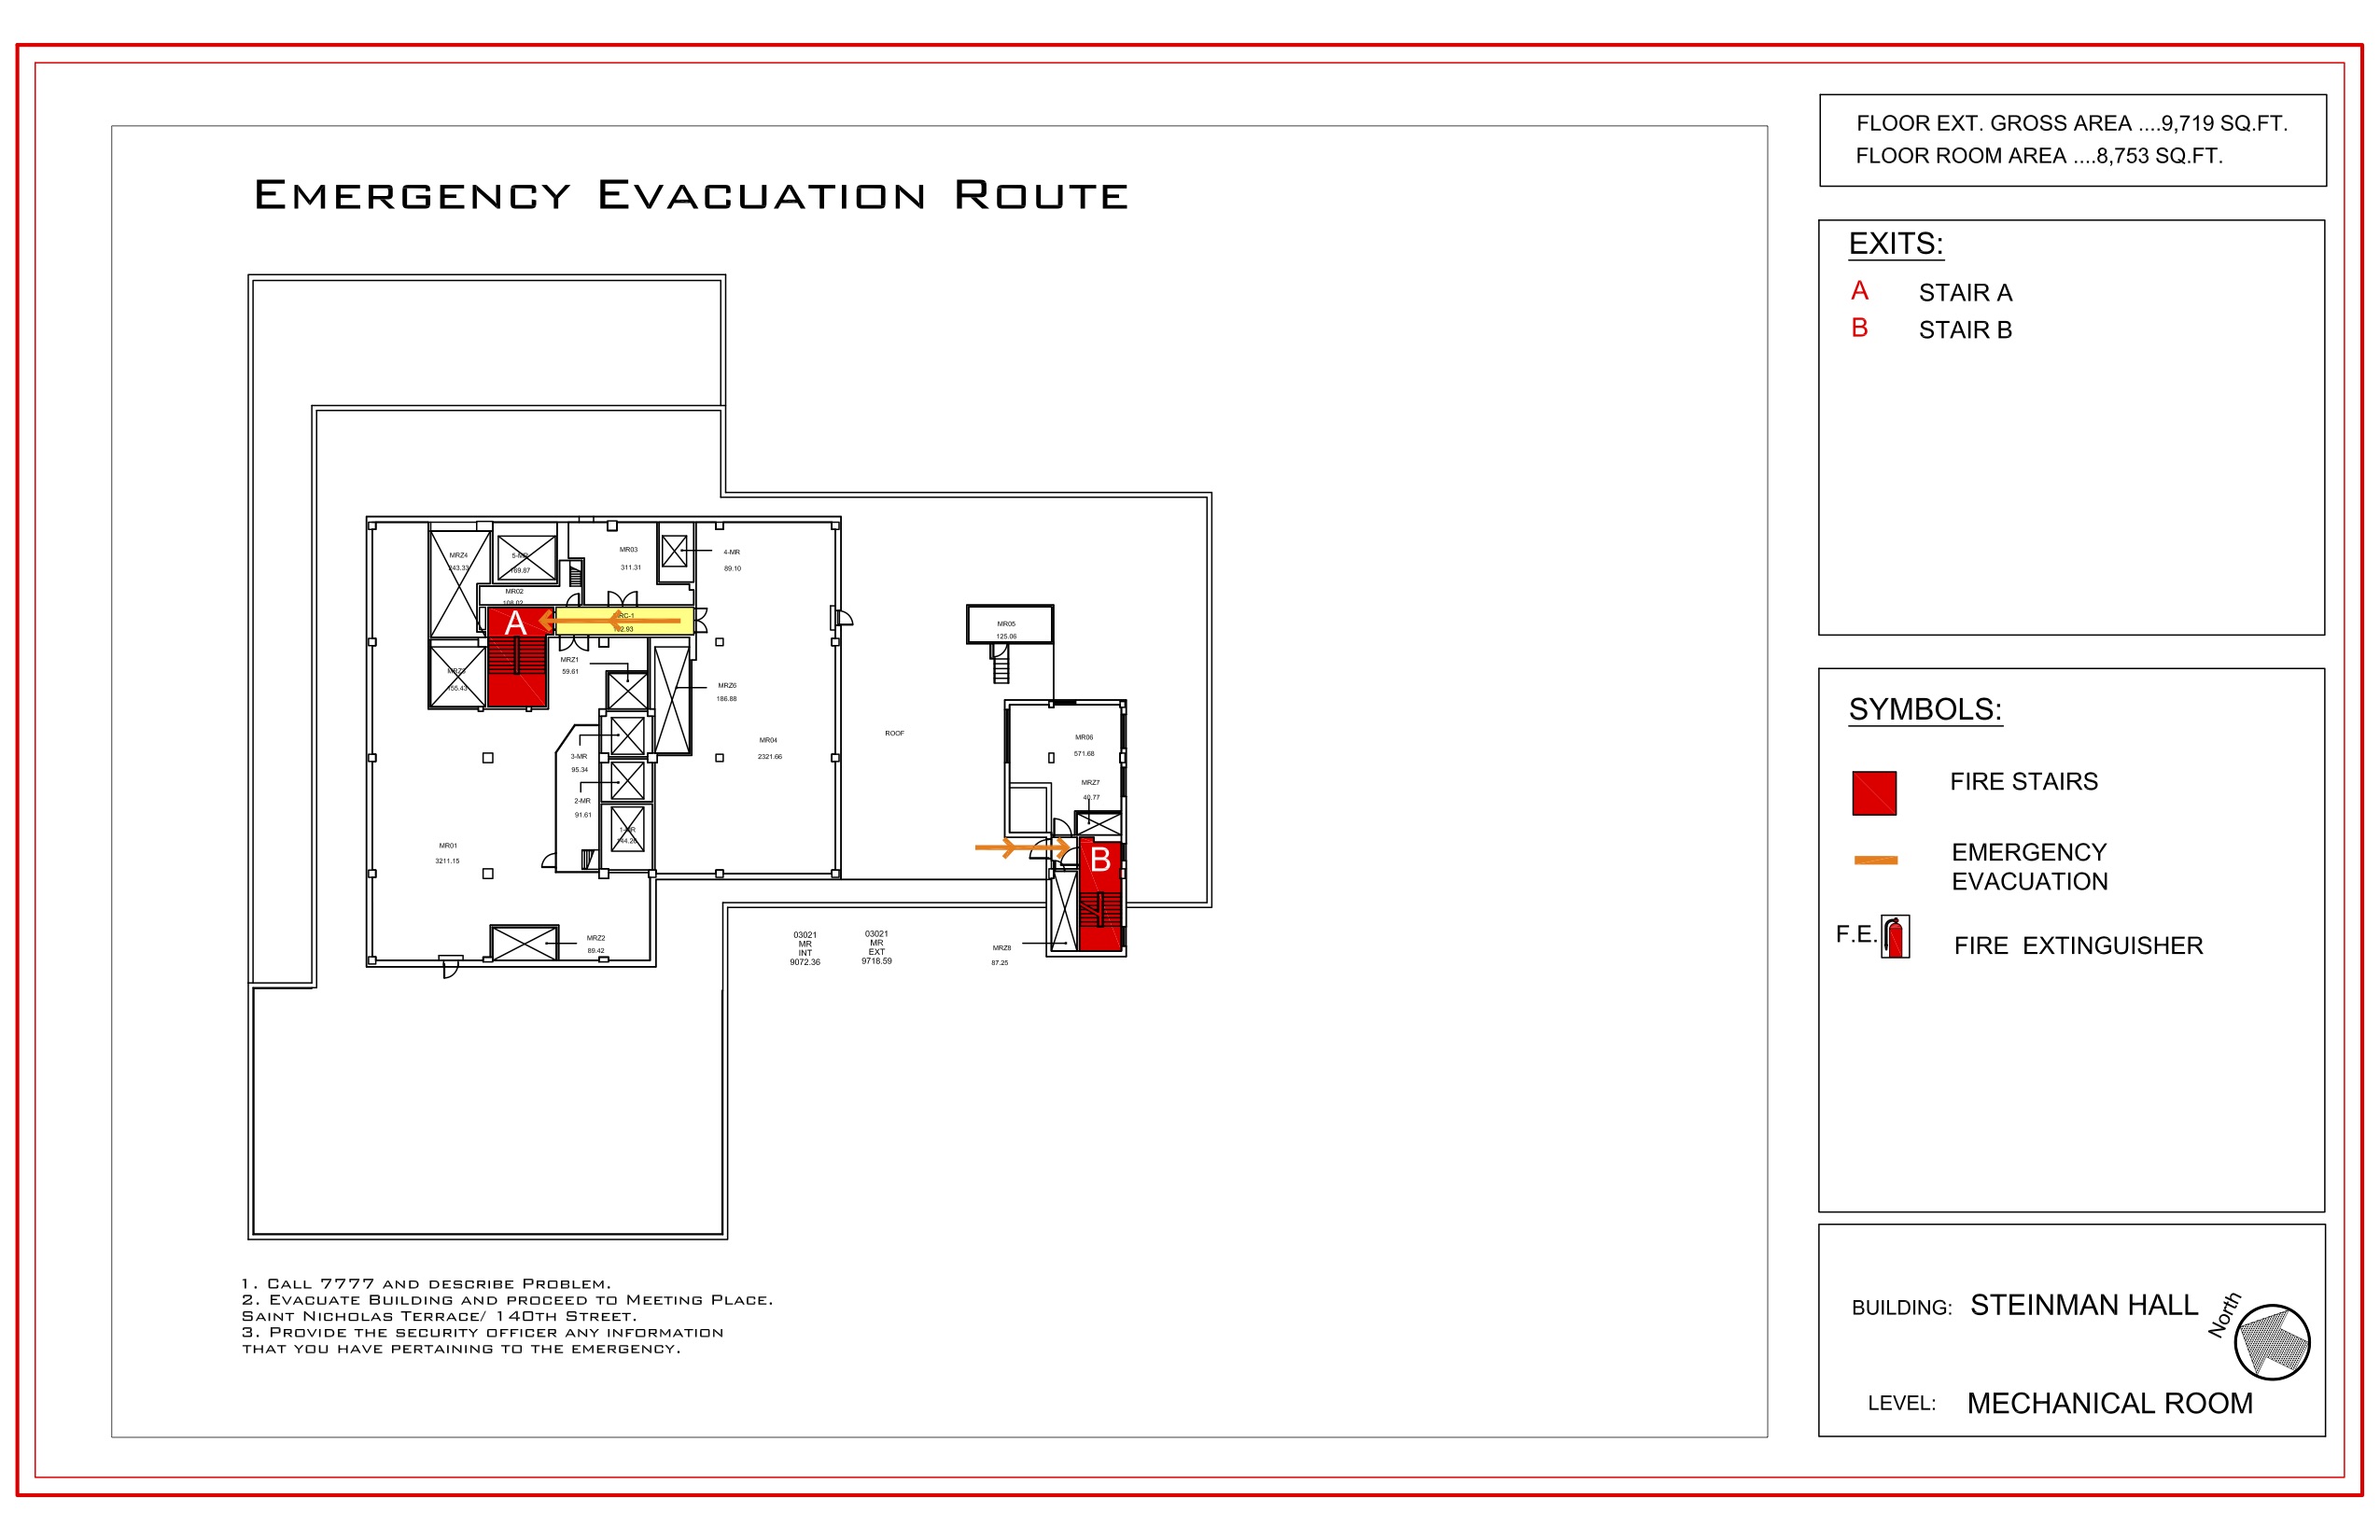 Steinman - Evacuation Route 2